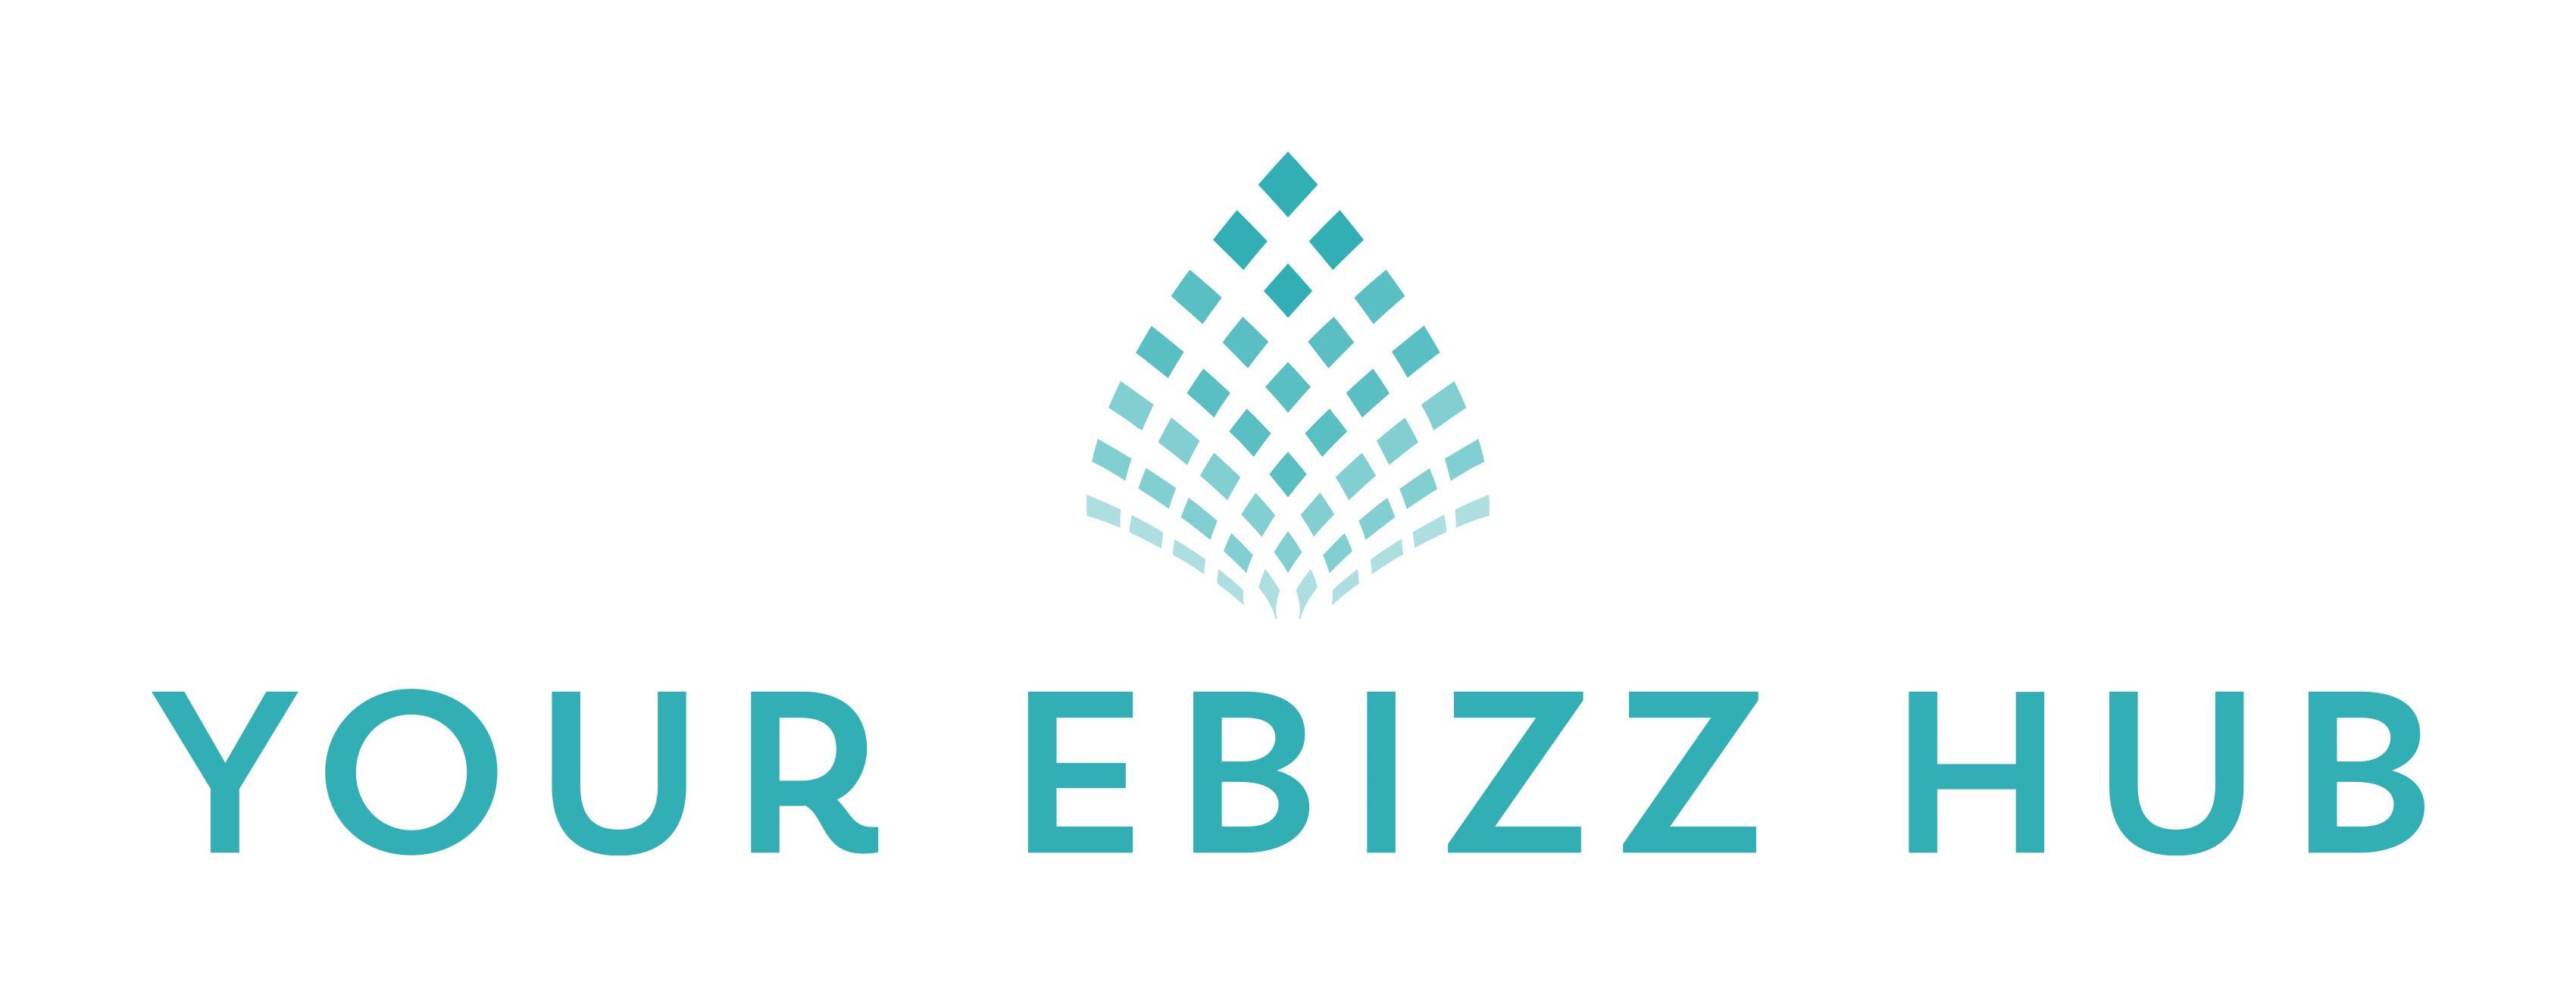 Your Ebizz Hub